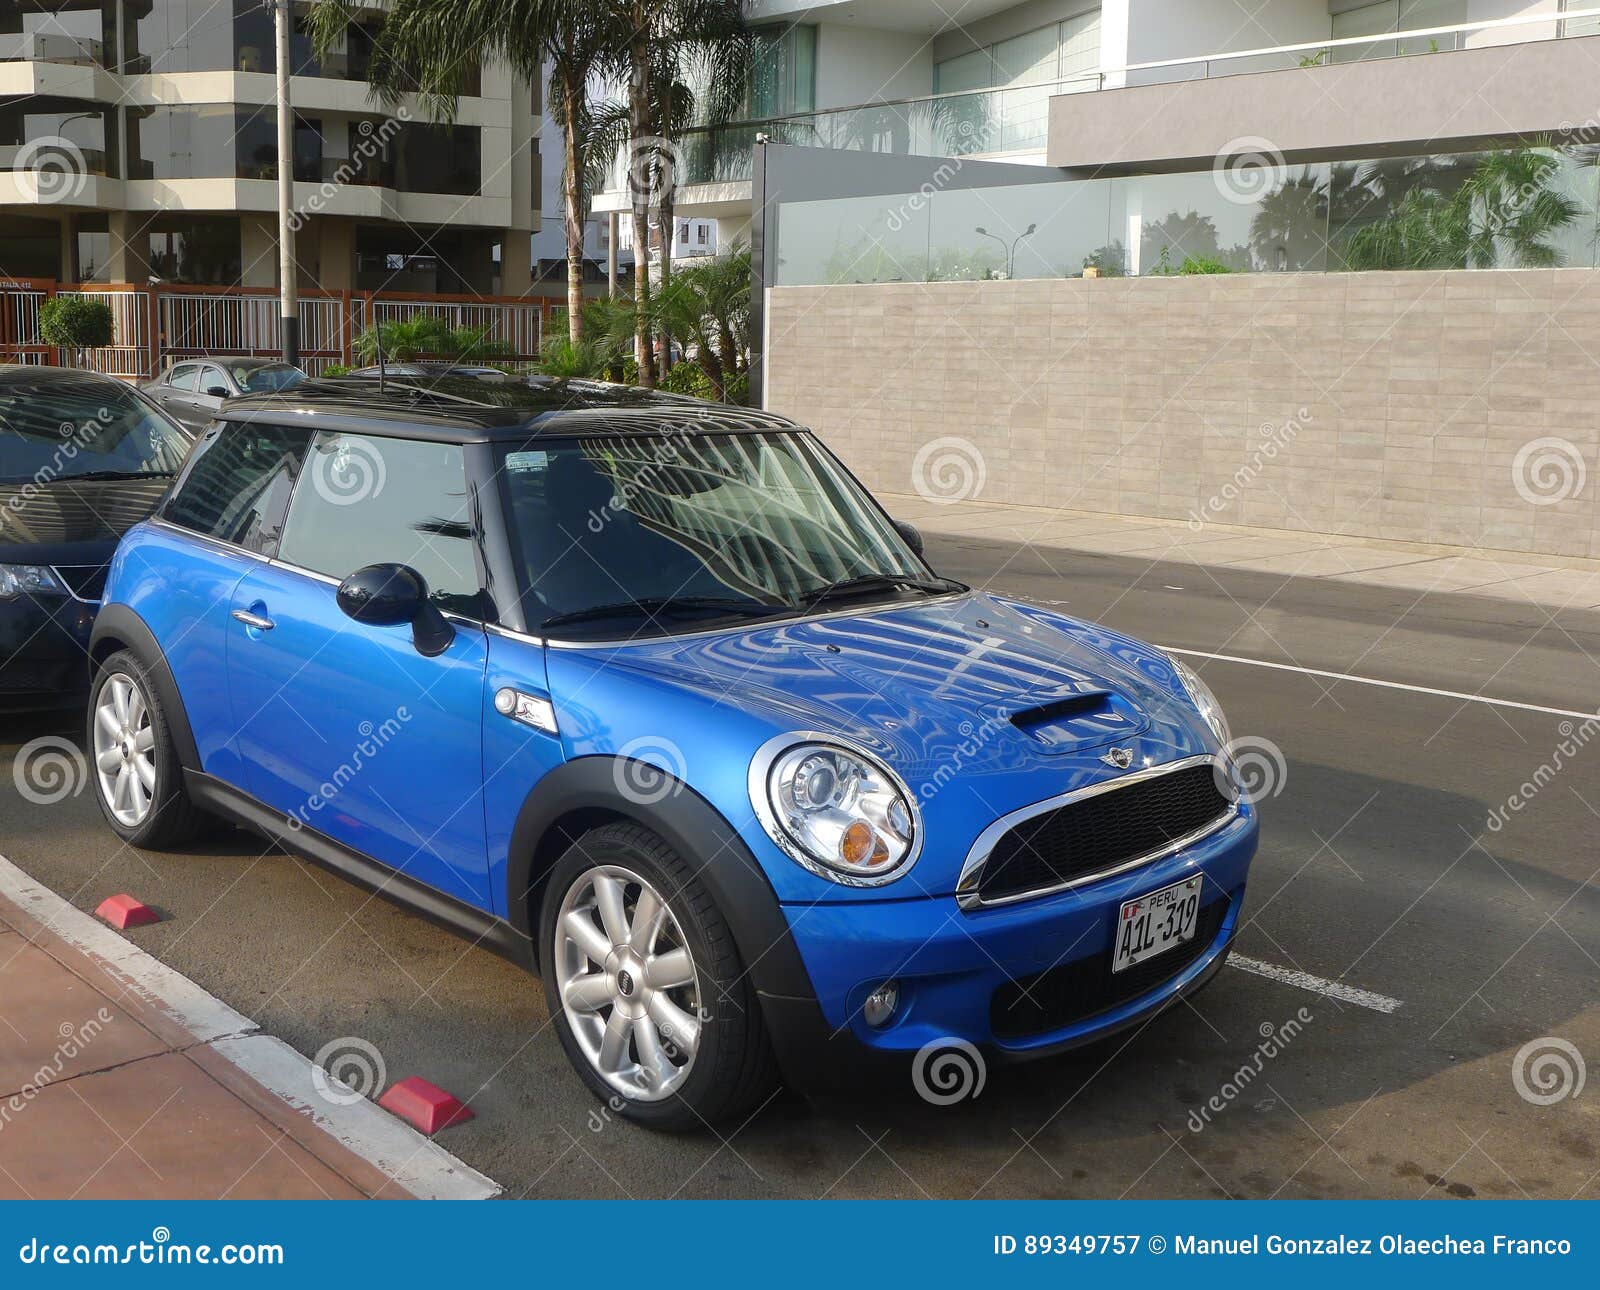 Mini Cooper S Blue and Black in Barranco, Lima Editorial Photography ...